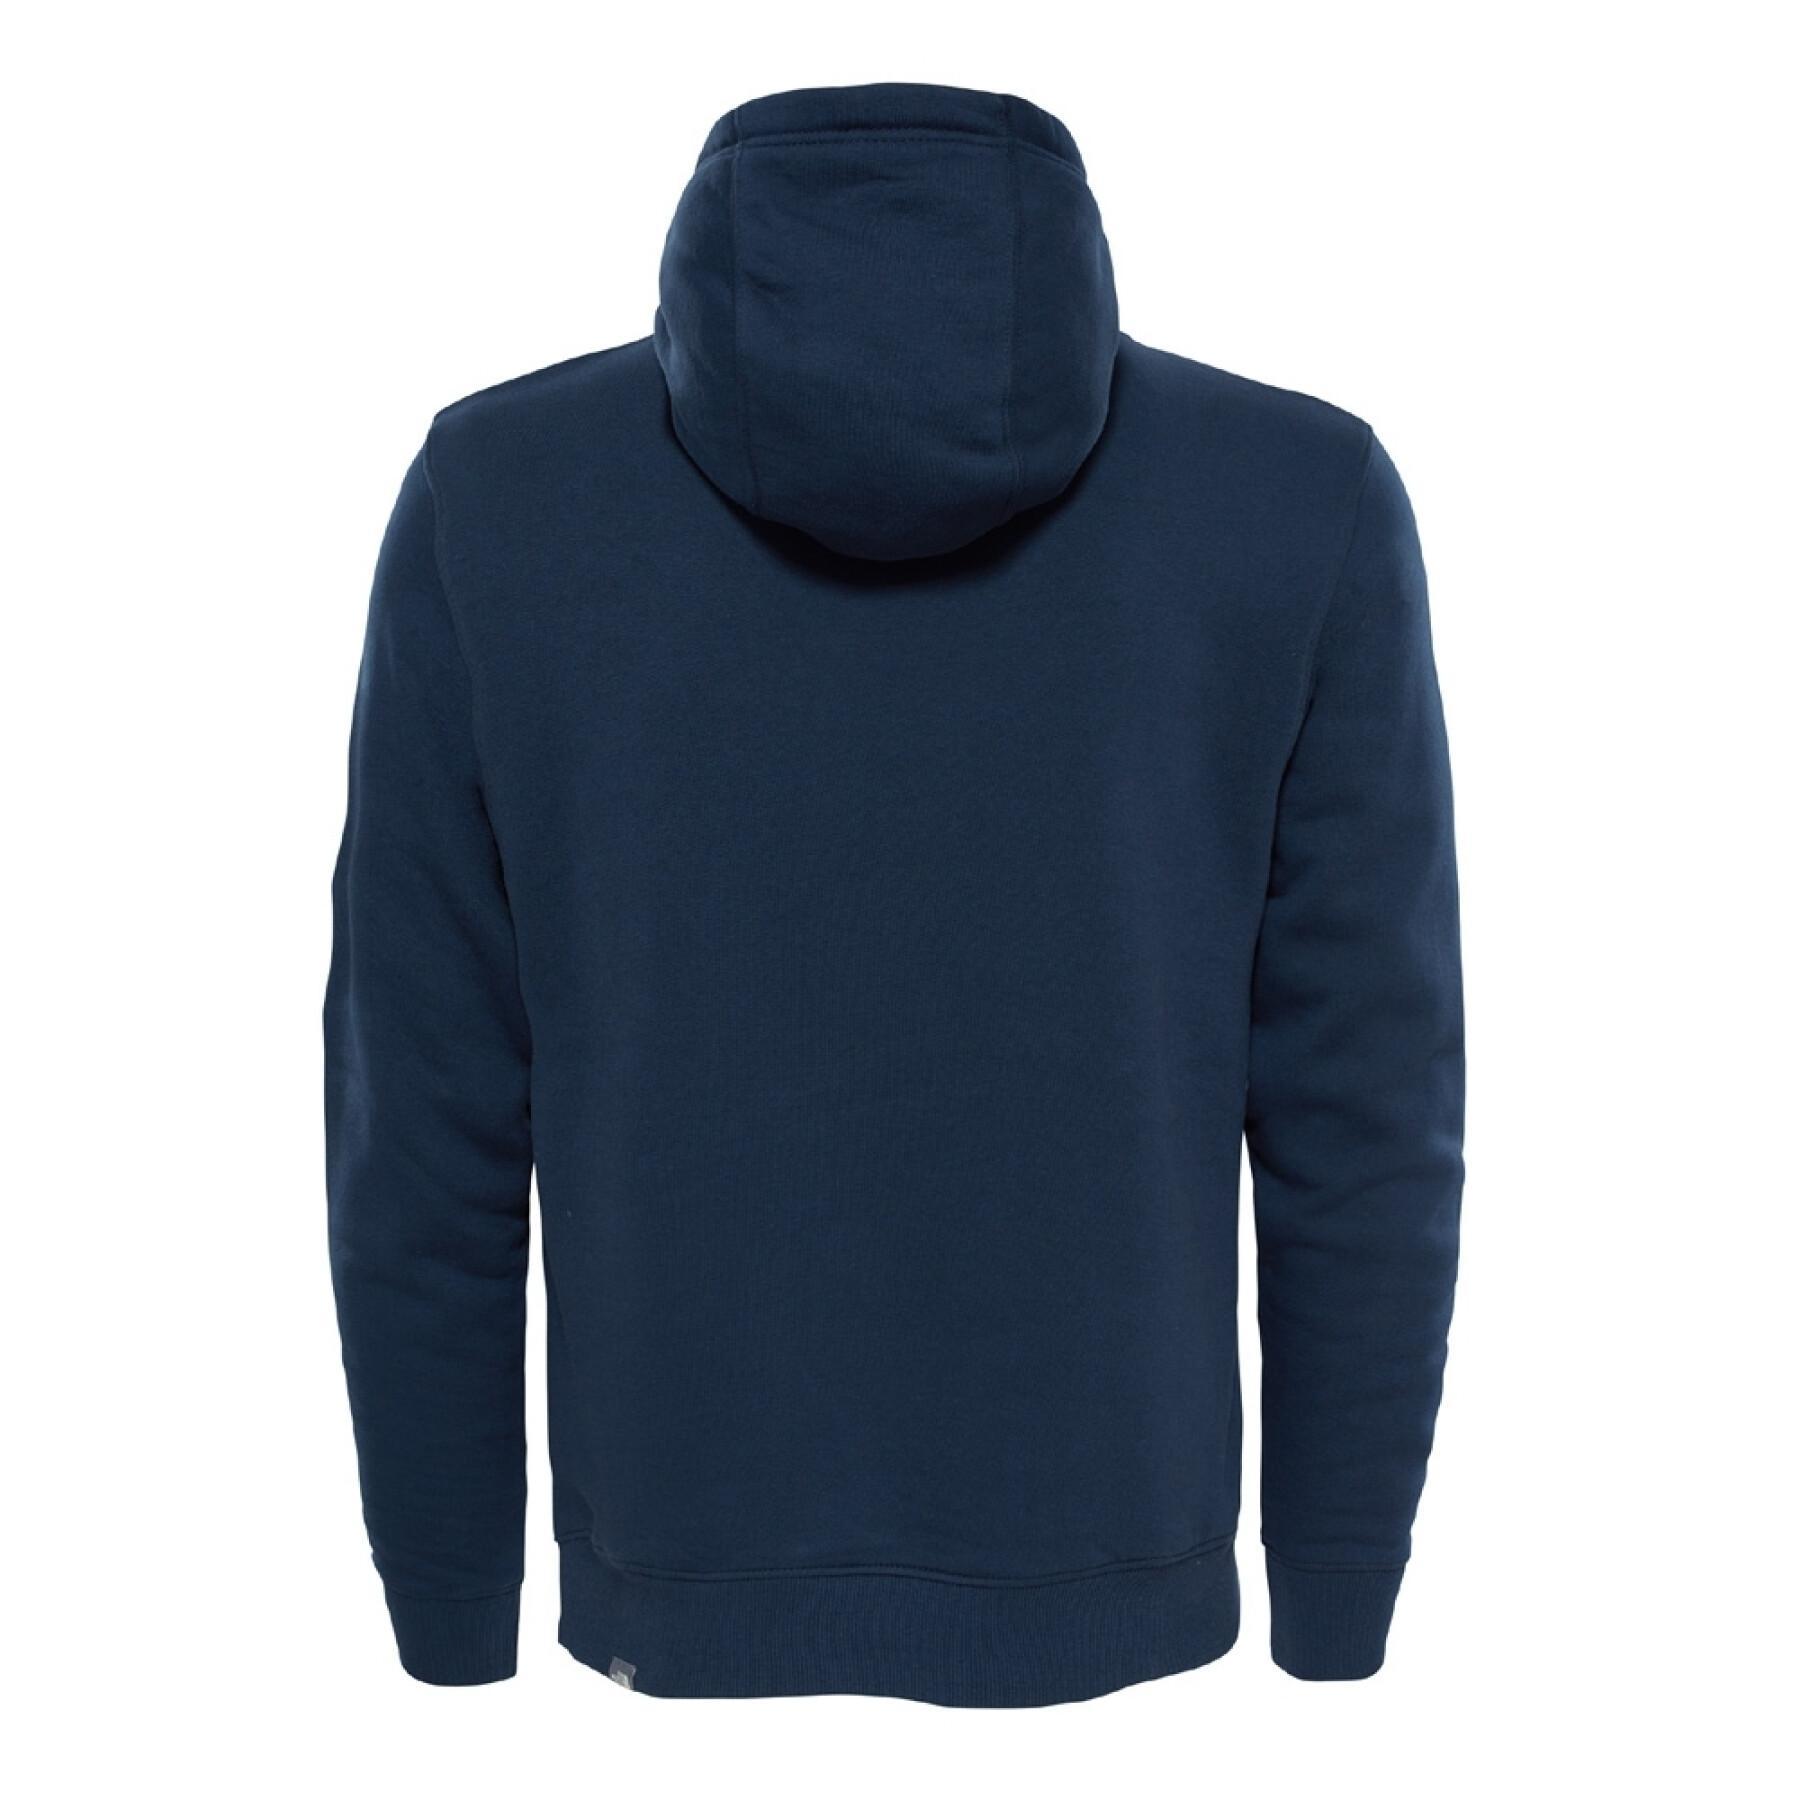 Hooded sweatshirt The North Face Men’s Drew Peak